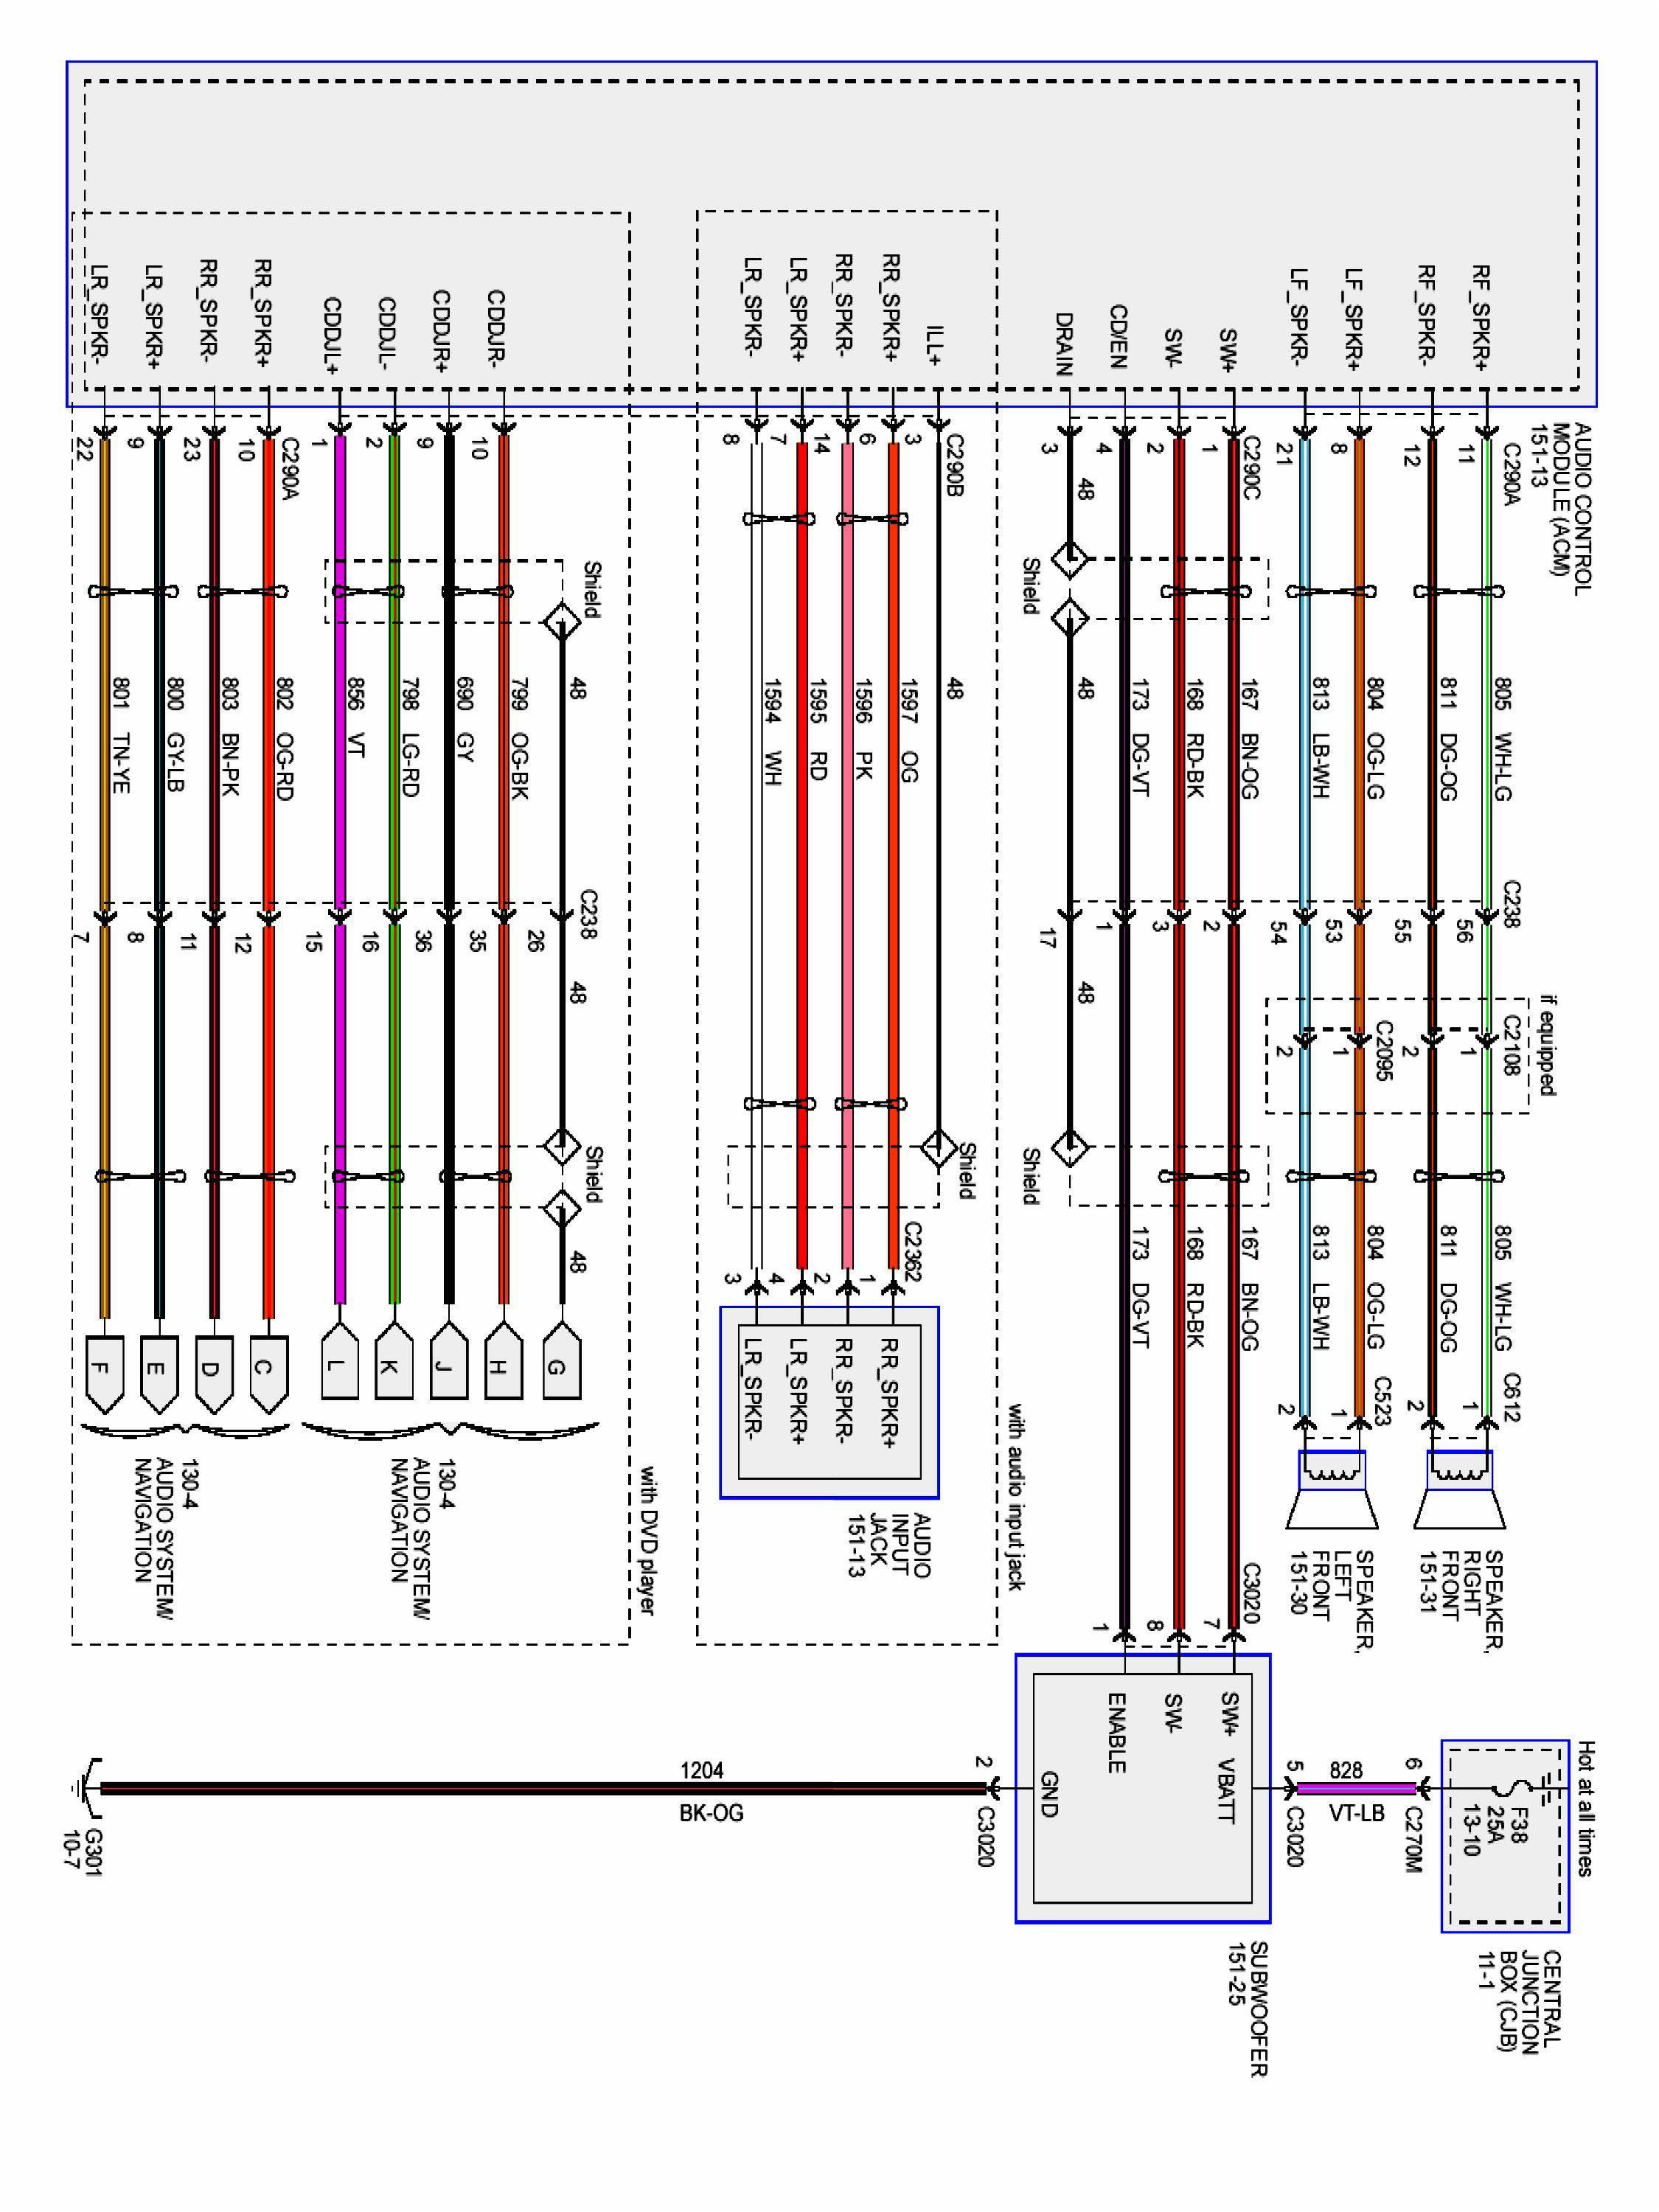 2000 ford f150 wiring diagram data wiring diagram wiring diagram for 2000 ford f 150